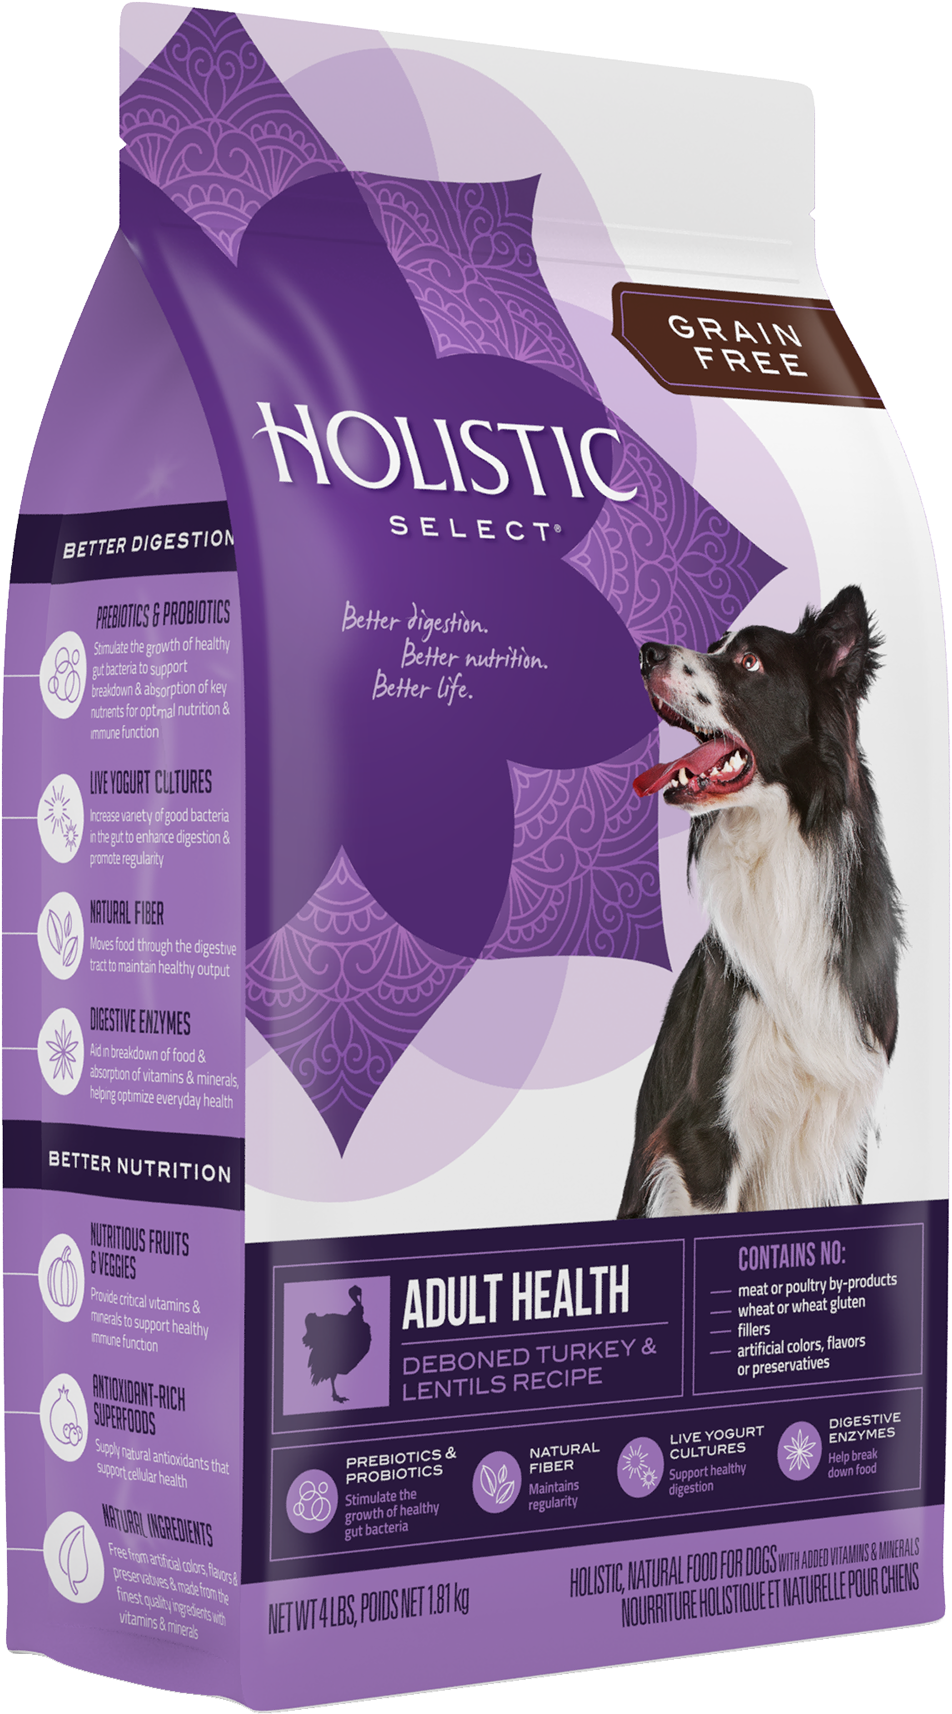 Holistic Select 4lb Grain Free Turkey Lentil Dog Food